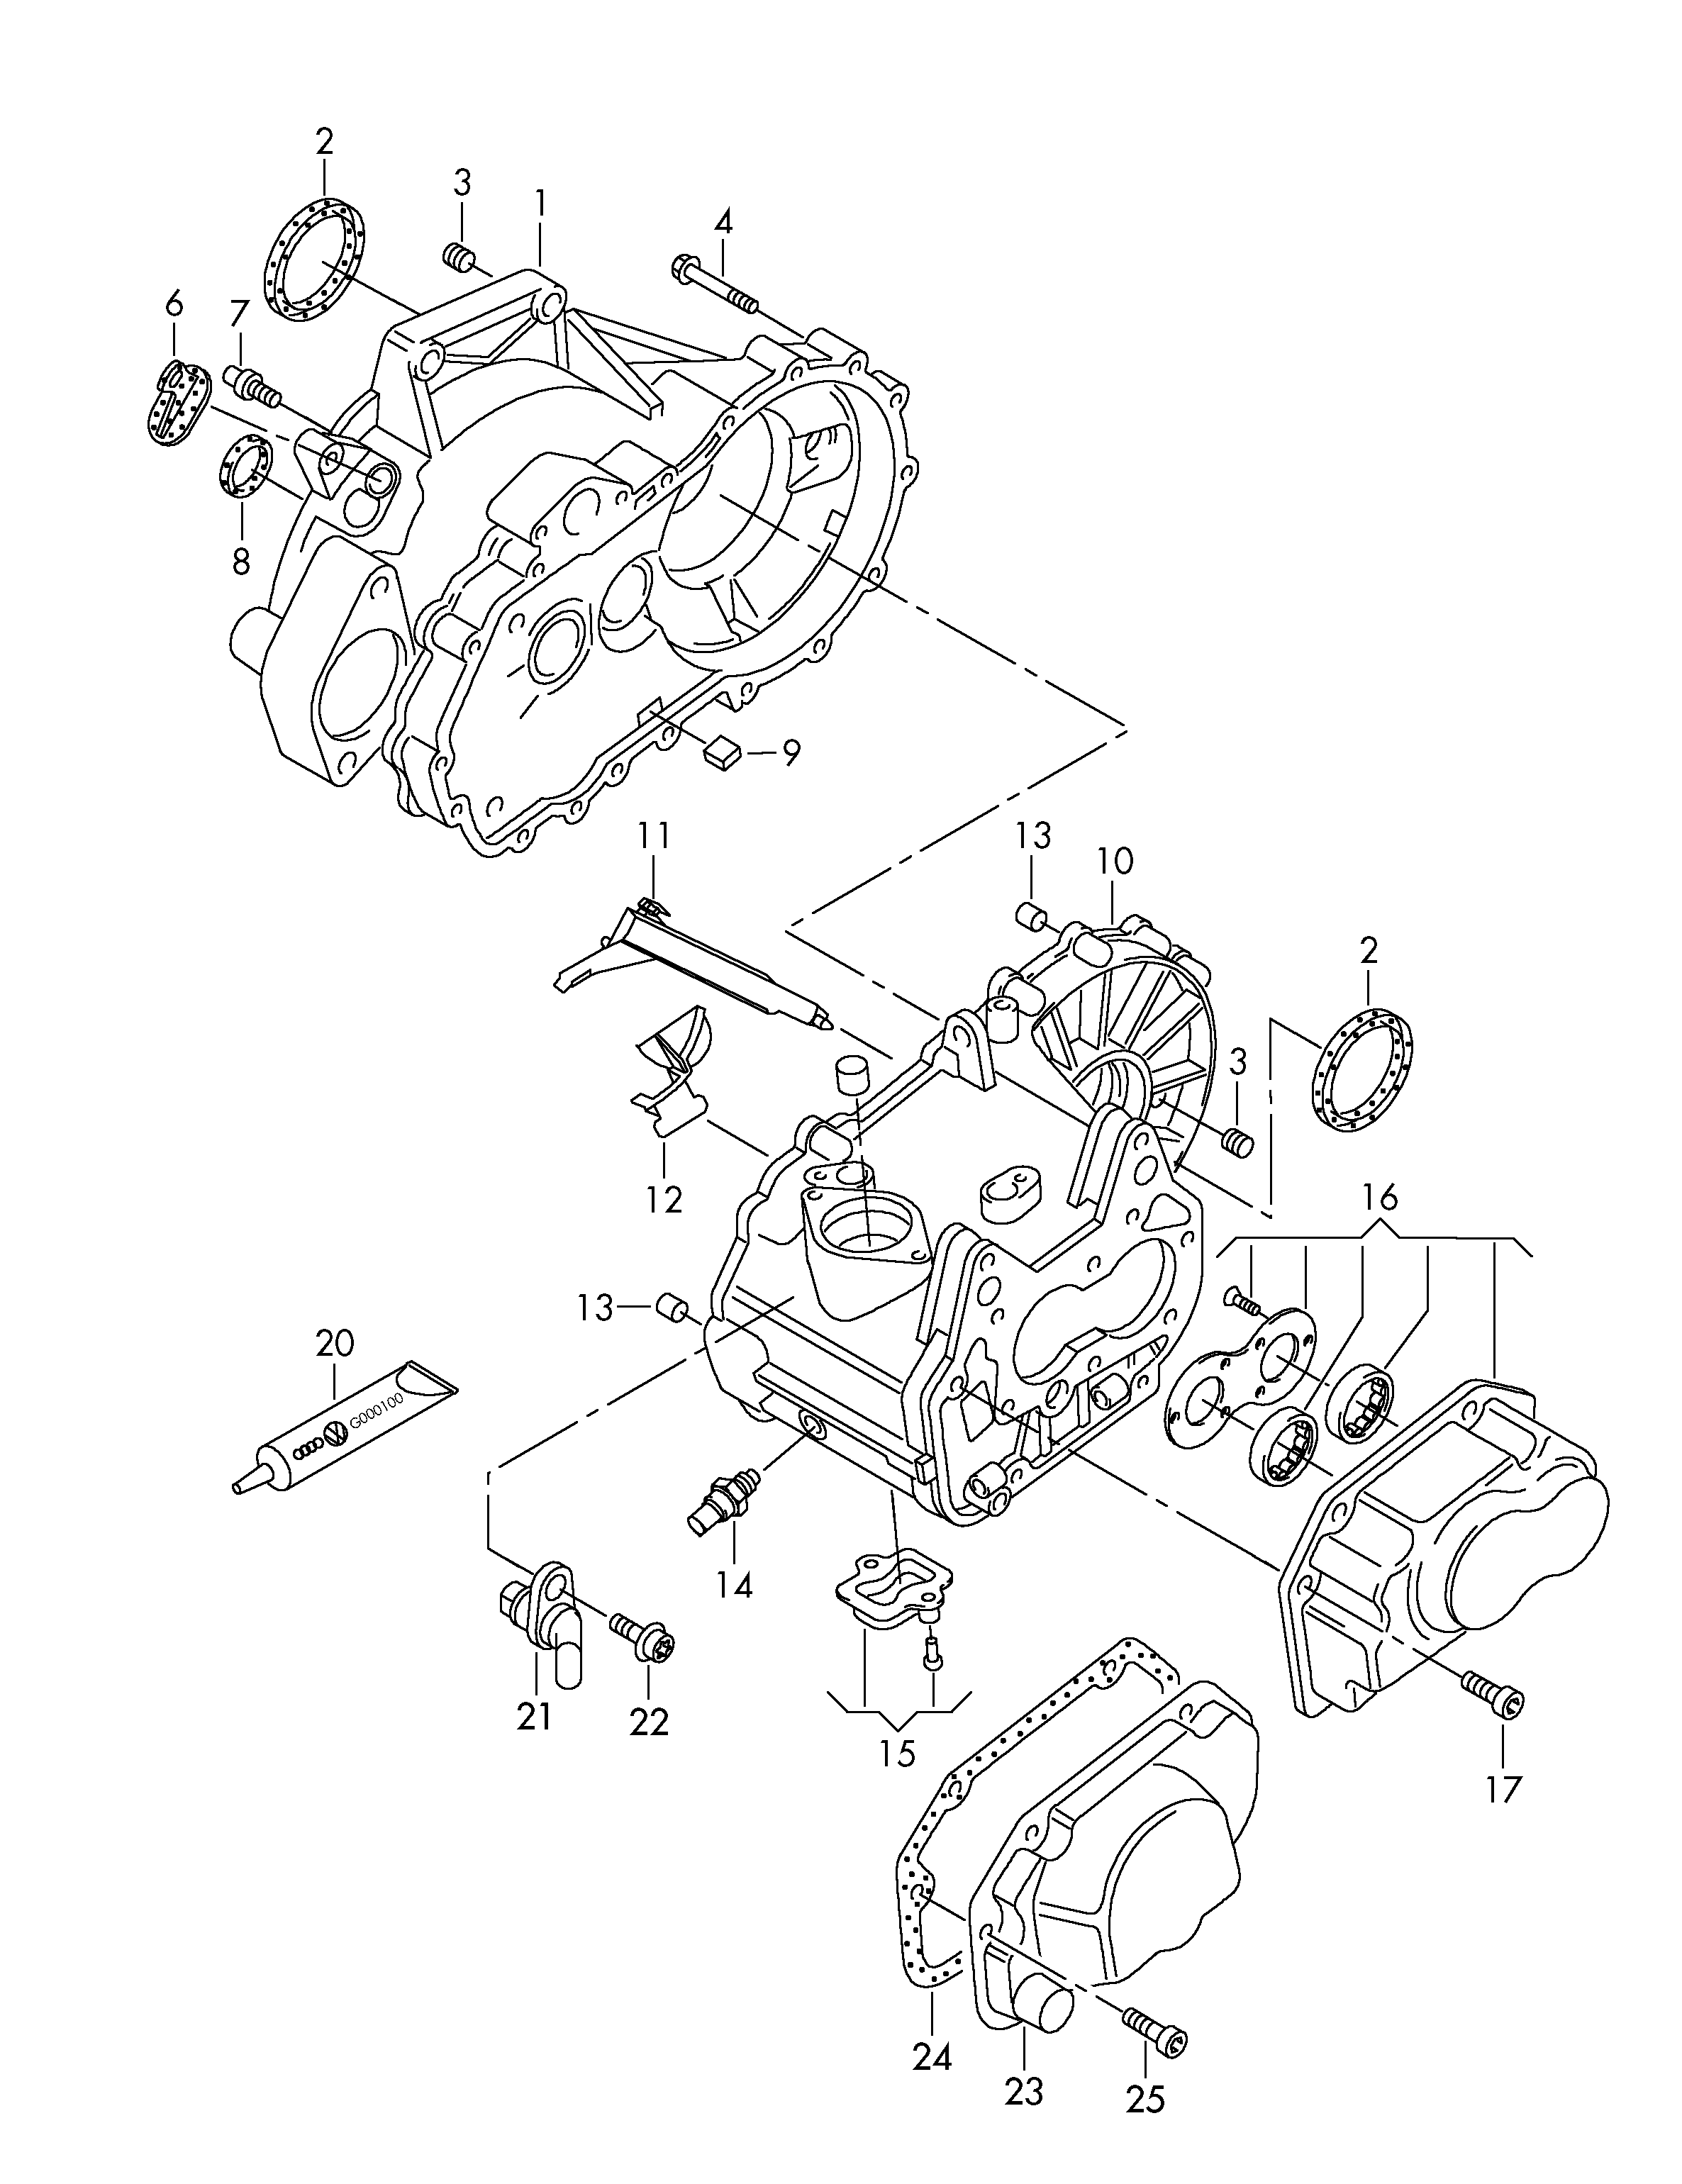 Gear housingfor 6 speed manual gearbox  - Octavia - oct